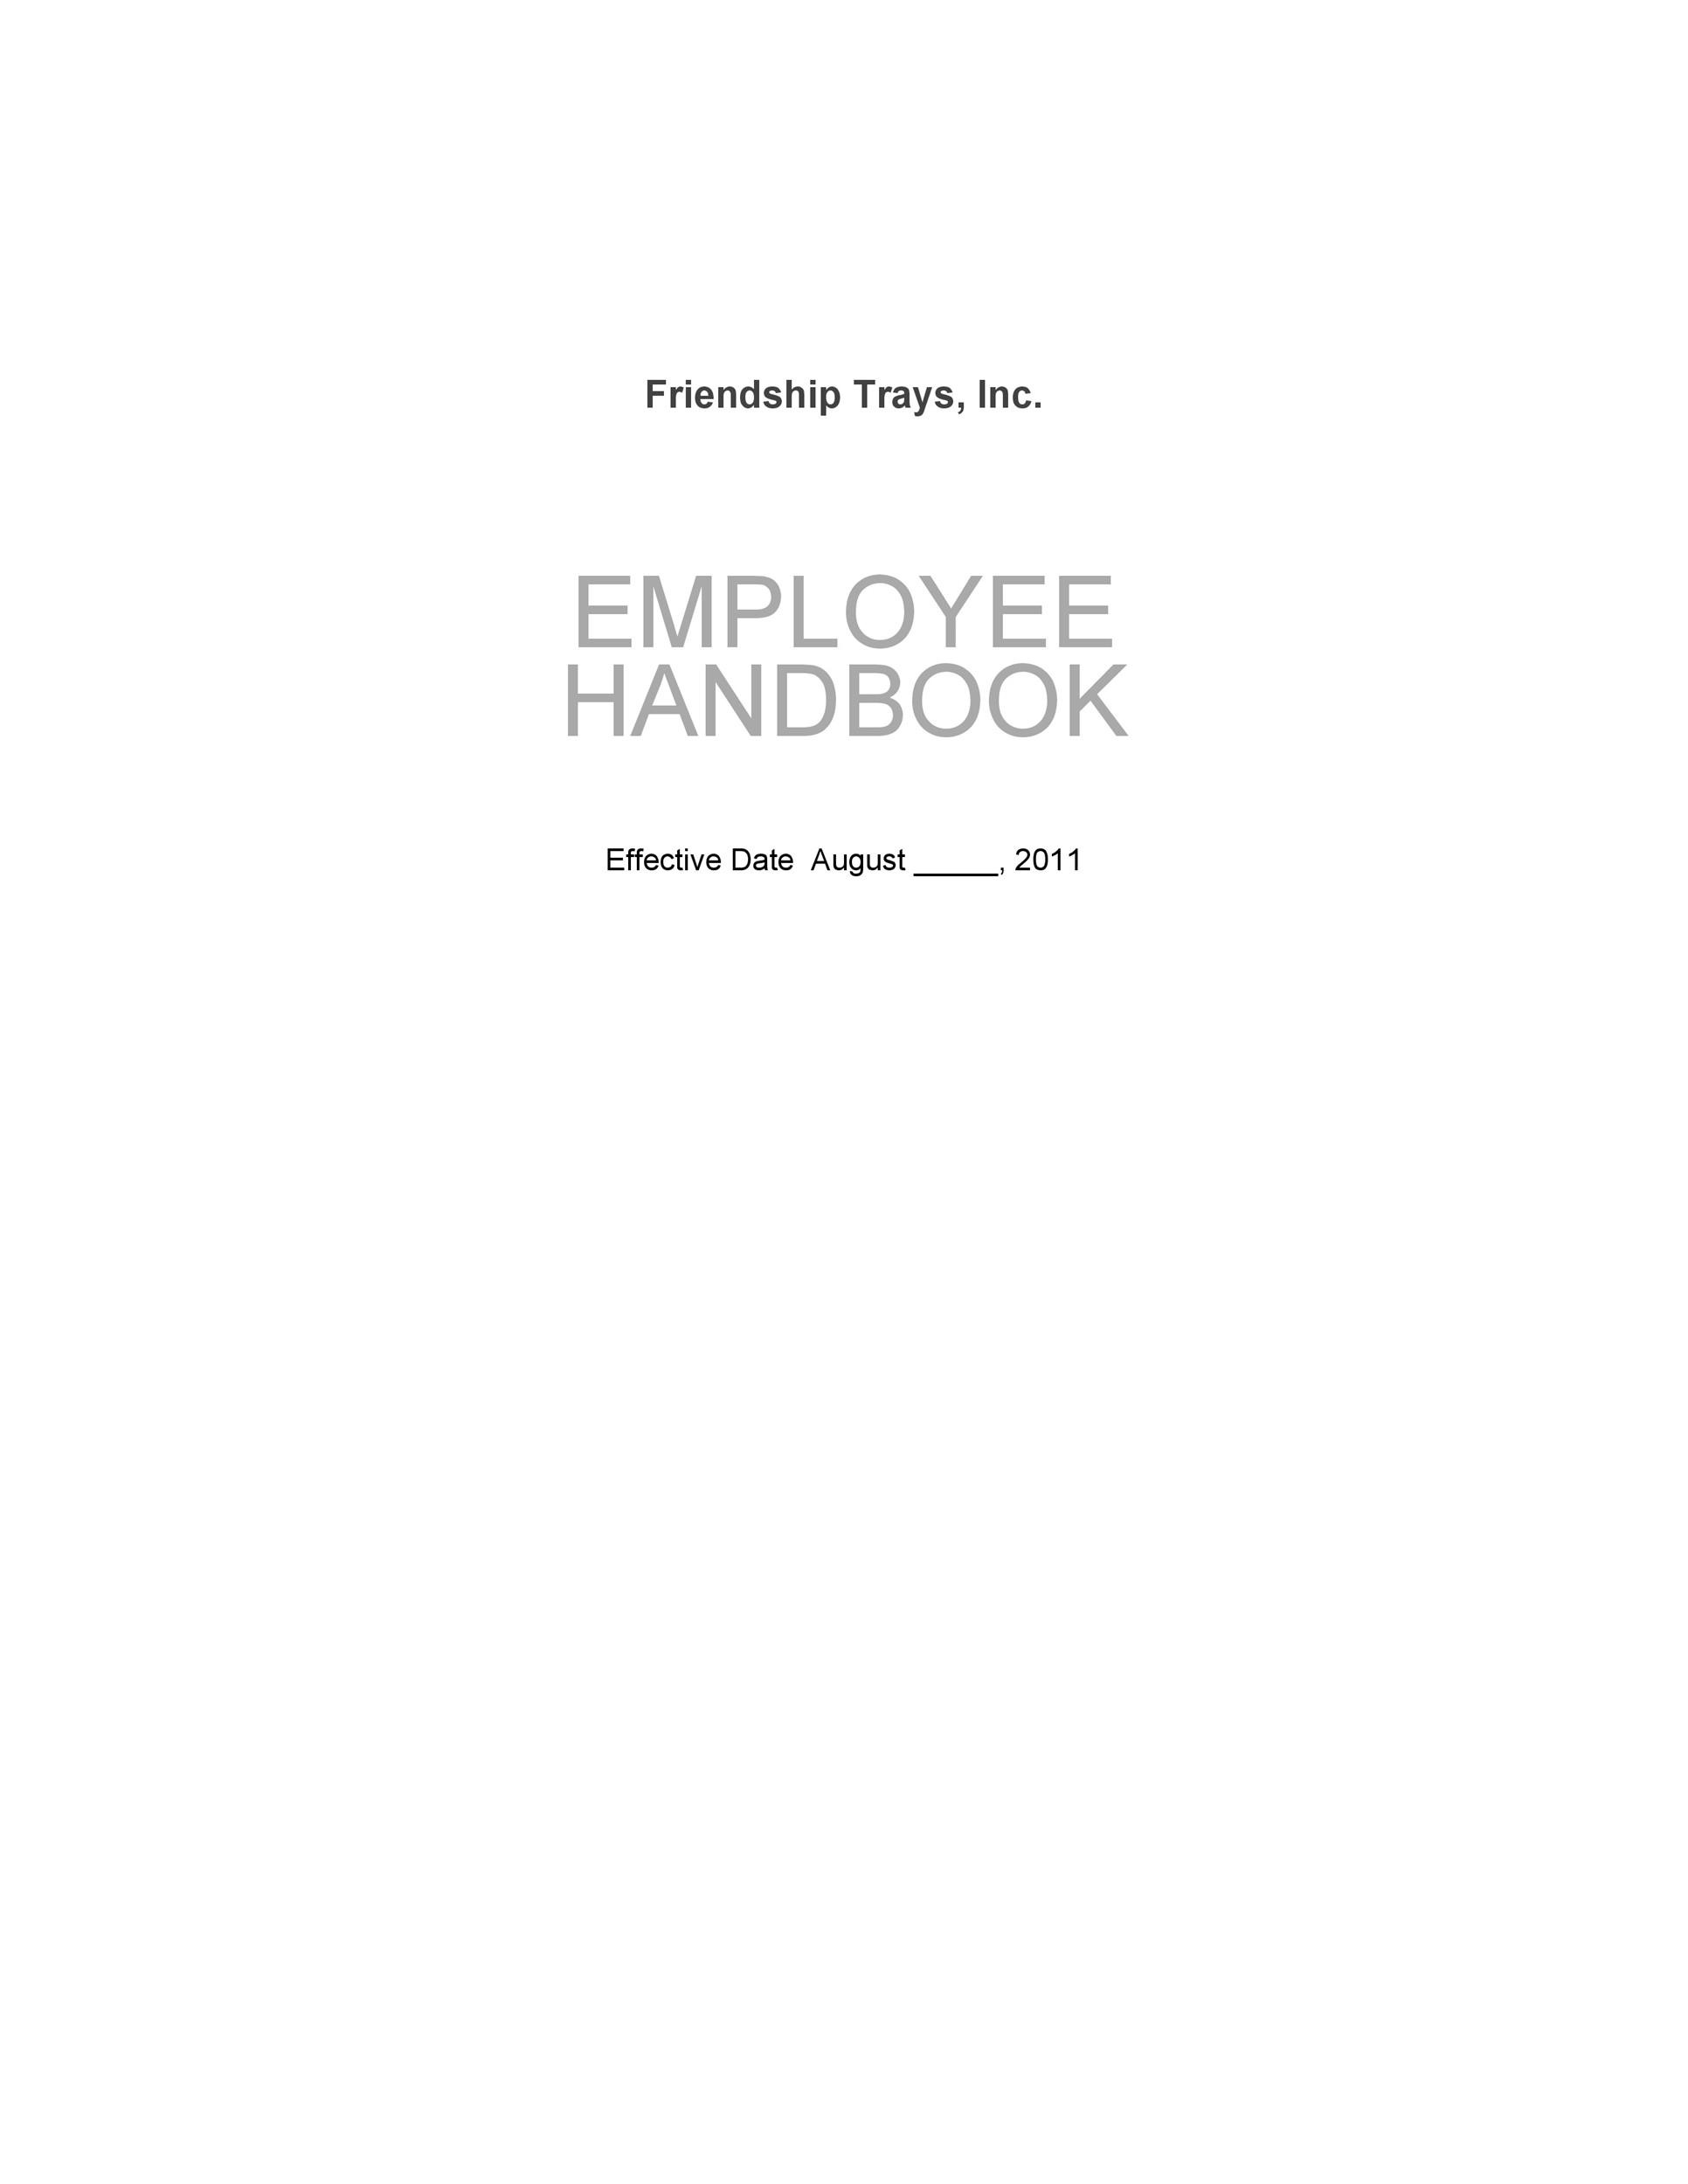 Free employee handbook template 03